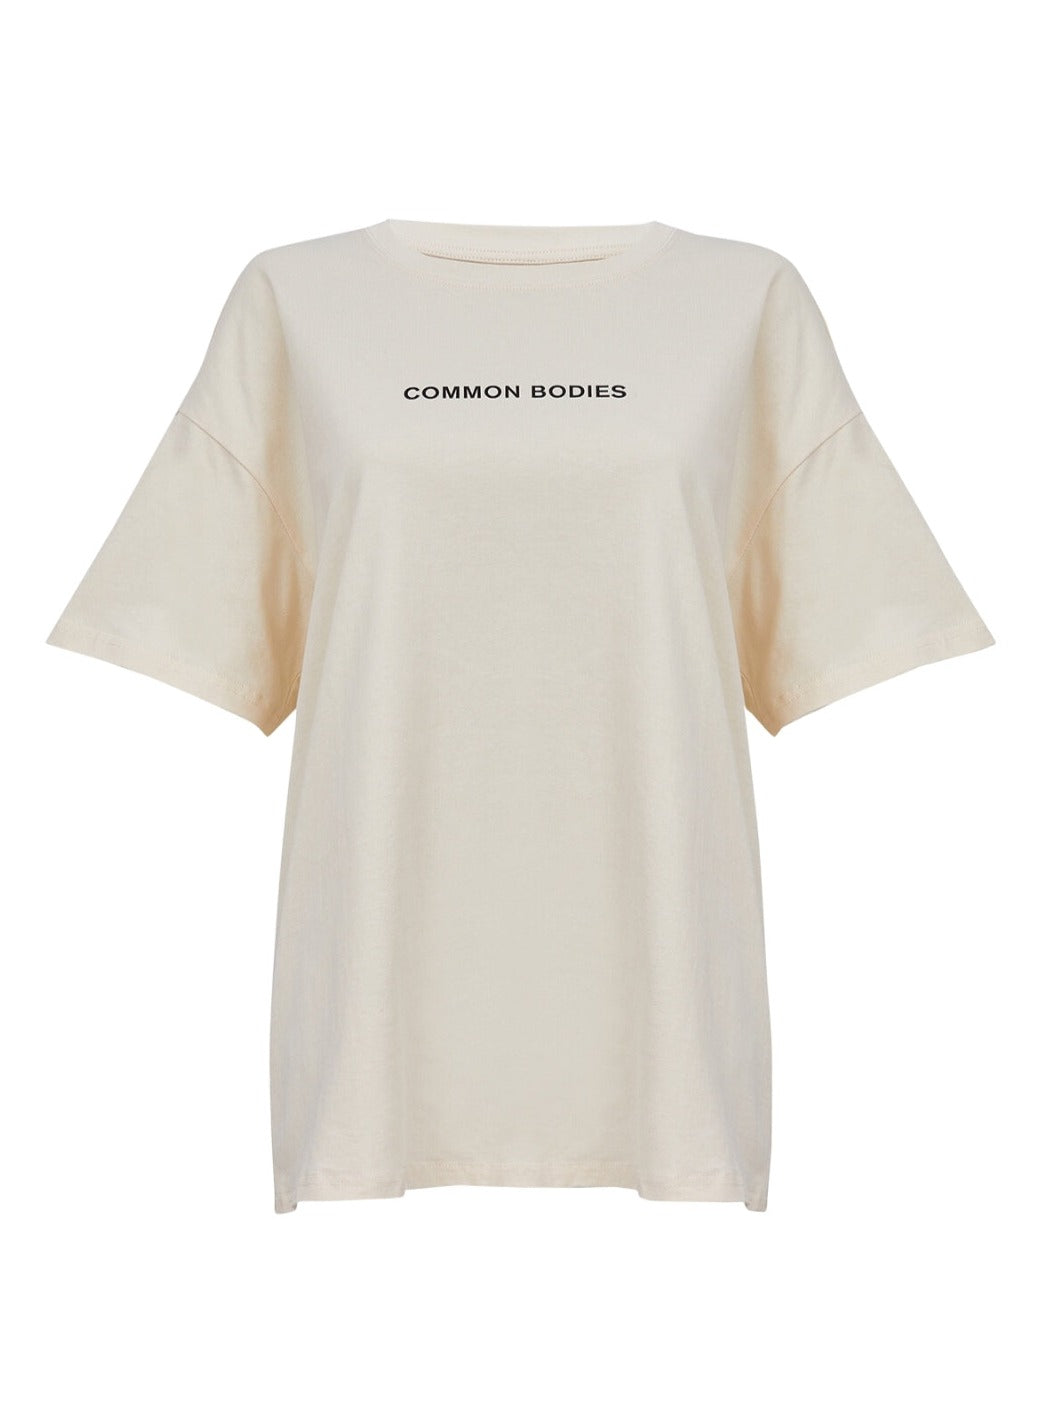 Common Bodies T-shirt in Latte (Unisex) (6 L LEFT)